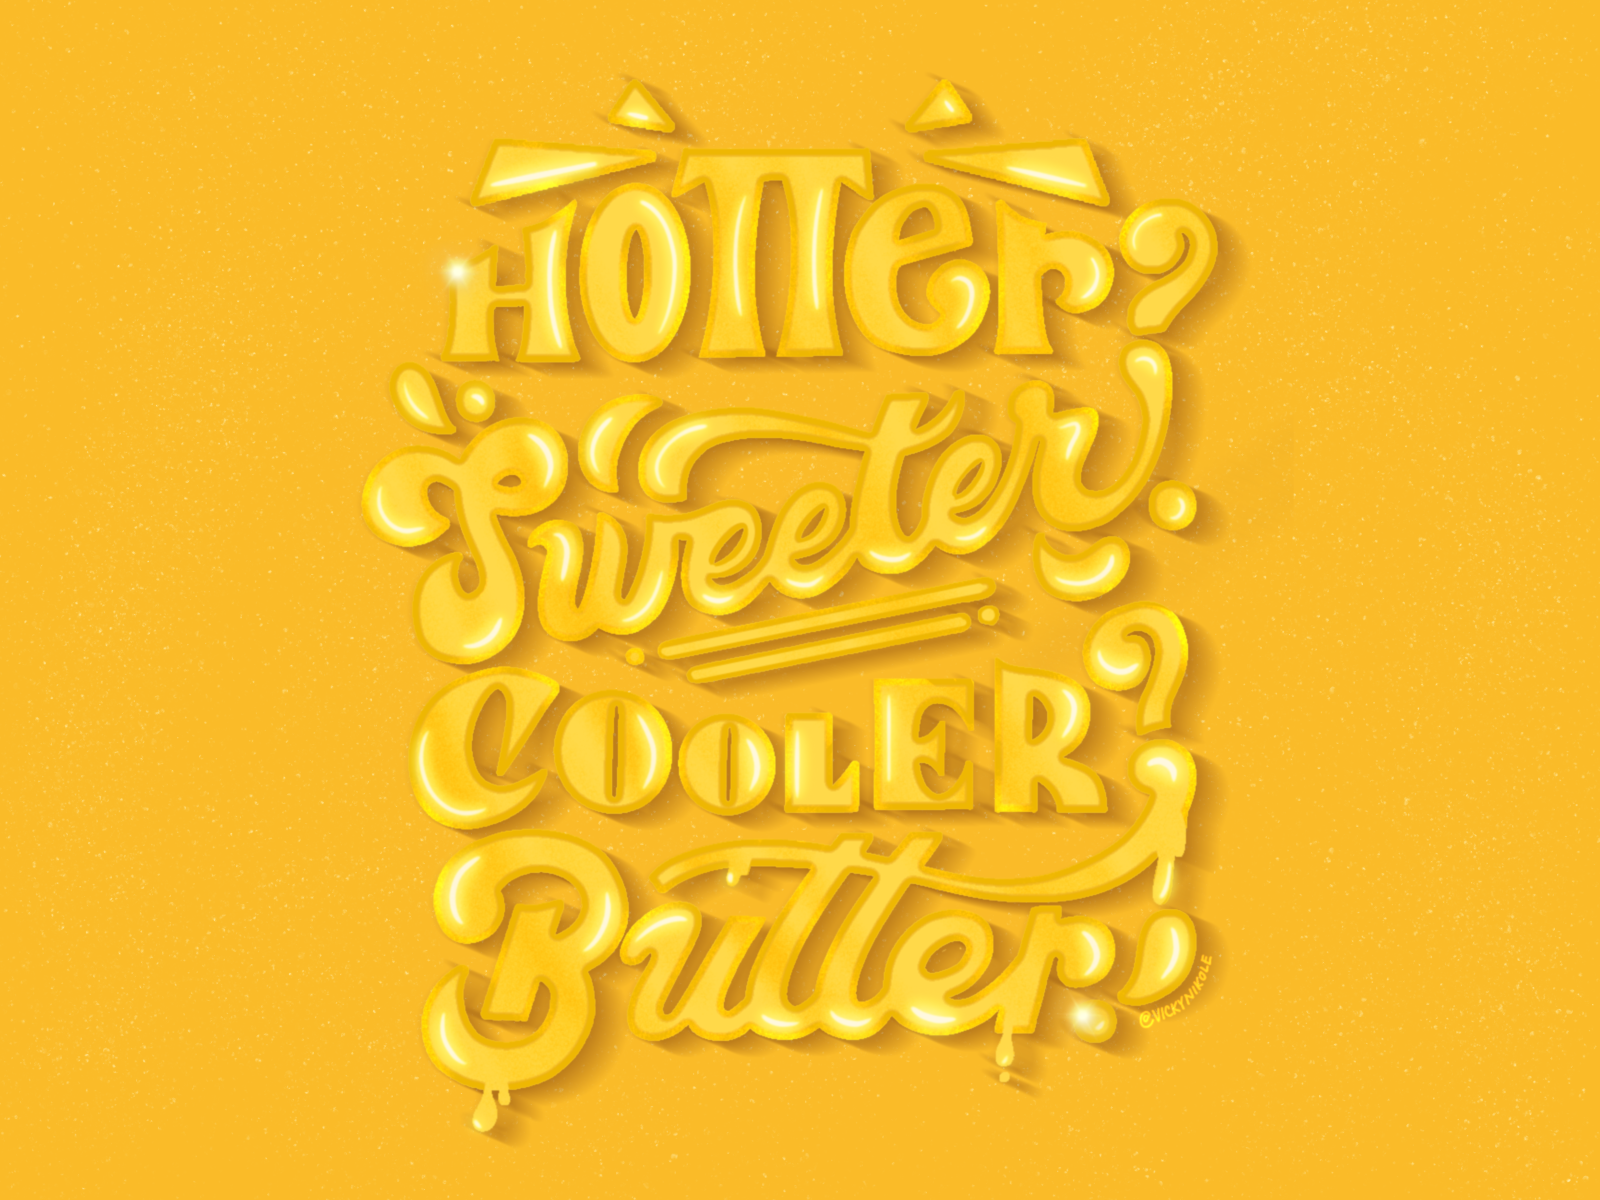 Butter - BTS🦋 #smoothlikebutter #ly